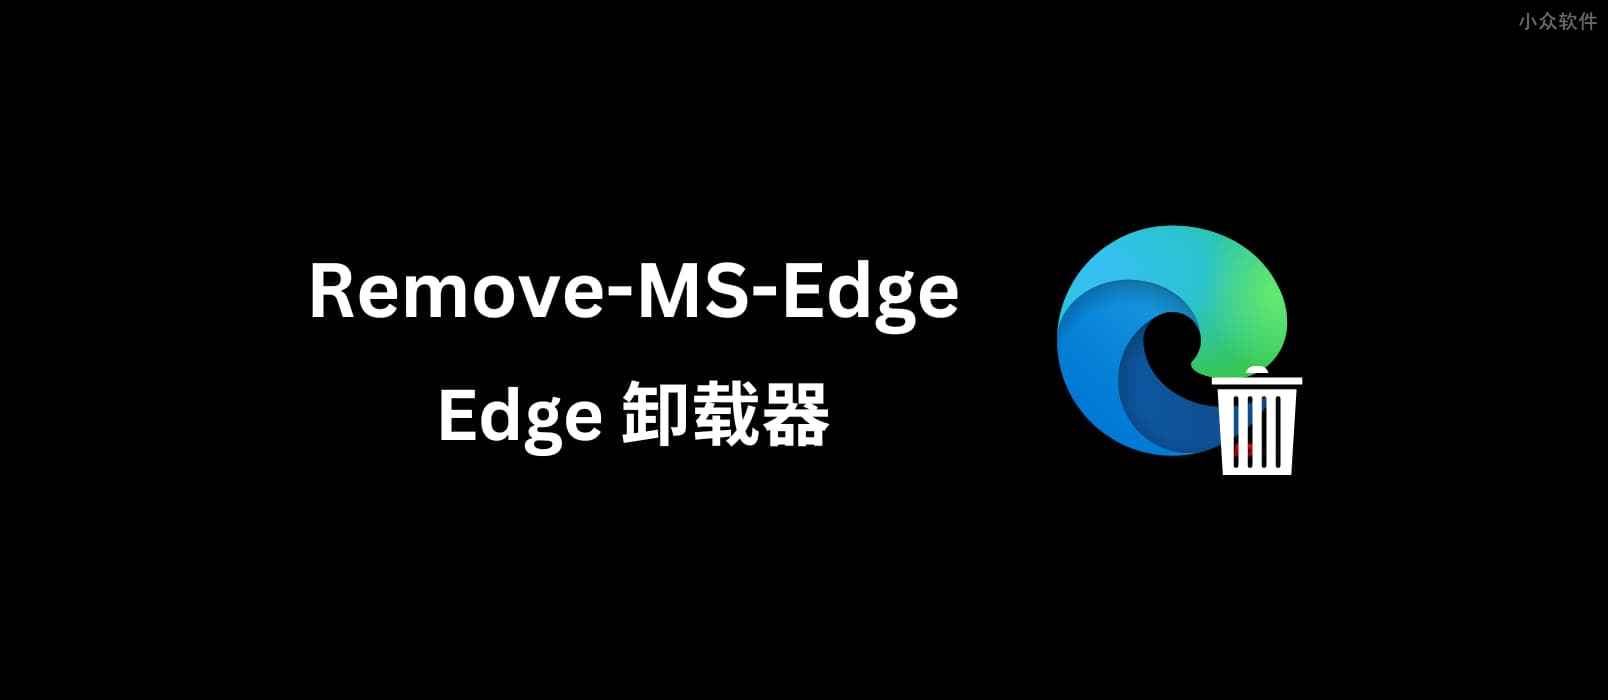 Remove-MS-Edge - Windows 下的 Edge 卸载器